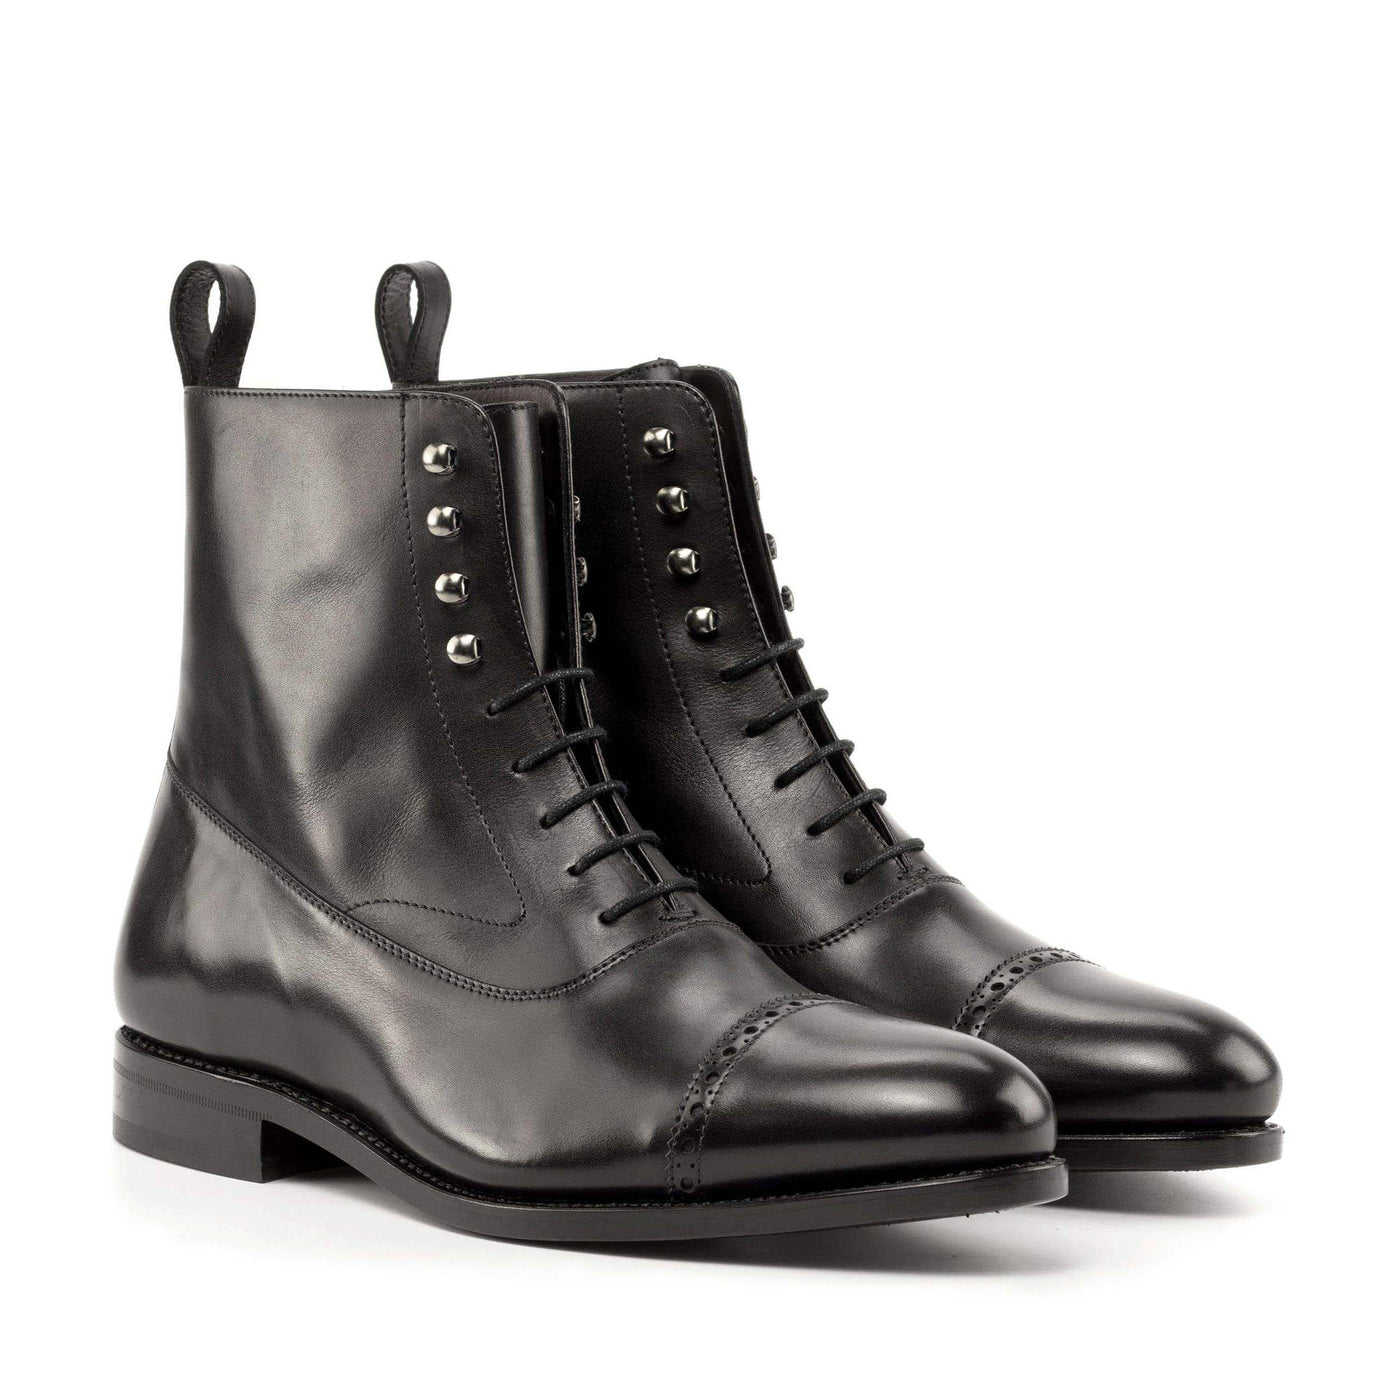 Men's Balmoral Boots Leather Goodyear Welt Black 5034 3- MERRIMIUM